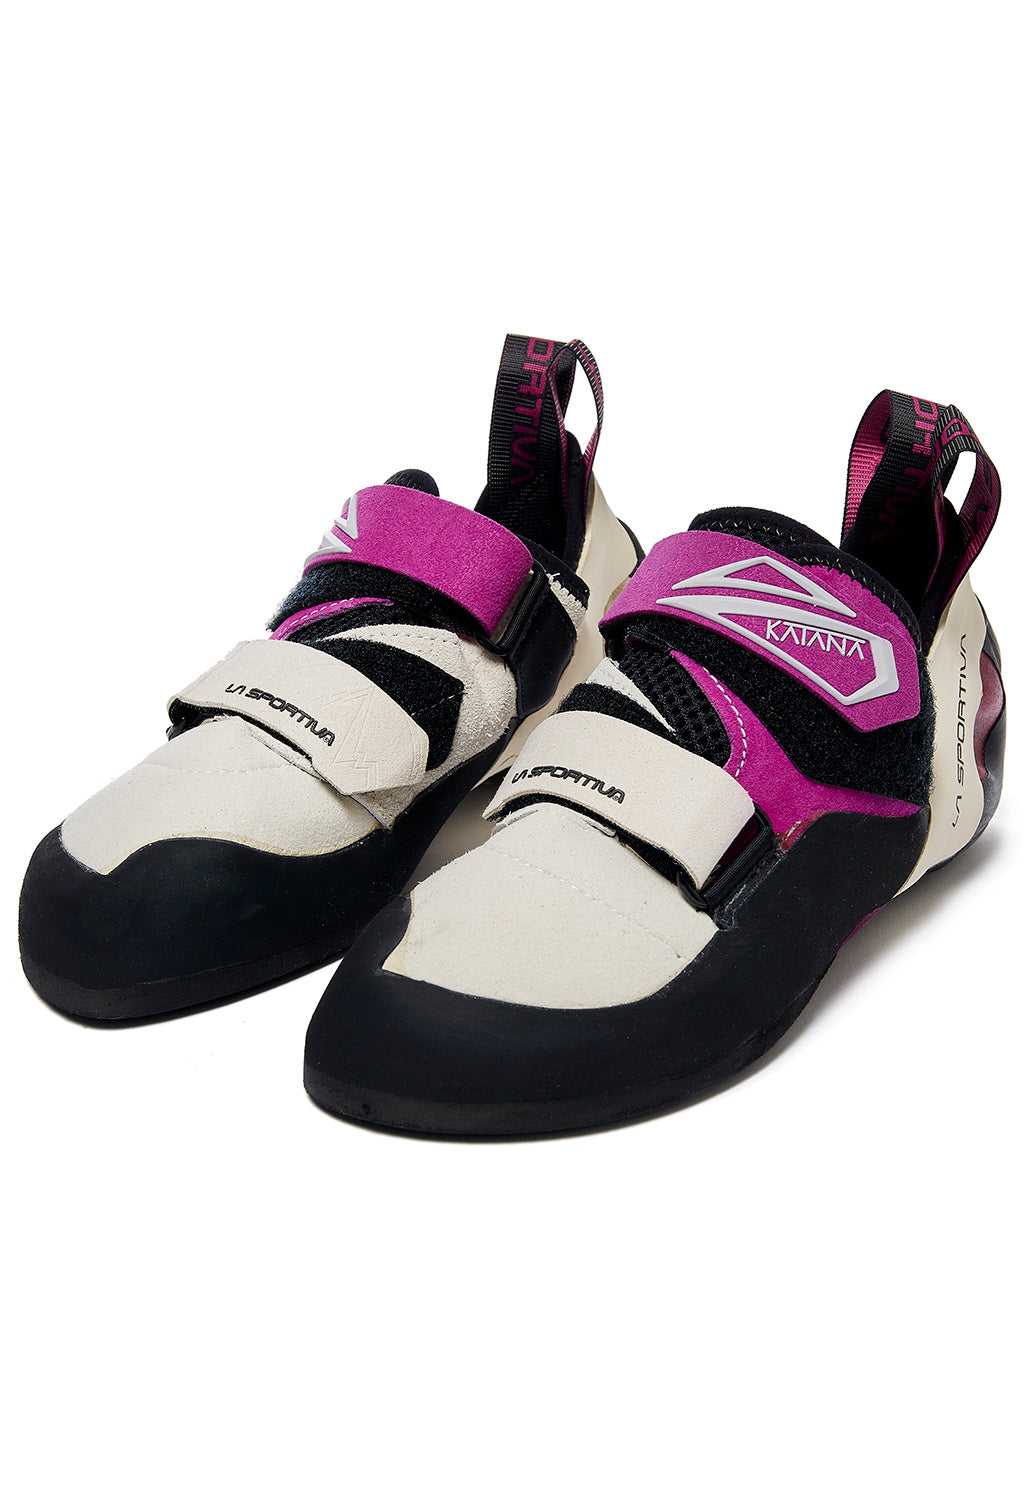 La Sportiva Katana Women's Shoes - Pink/White